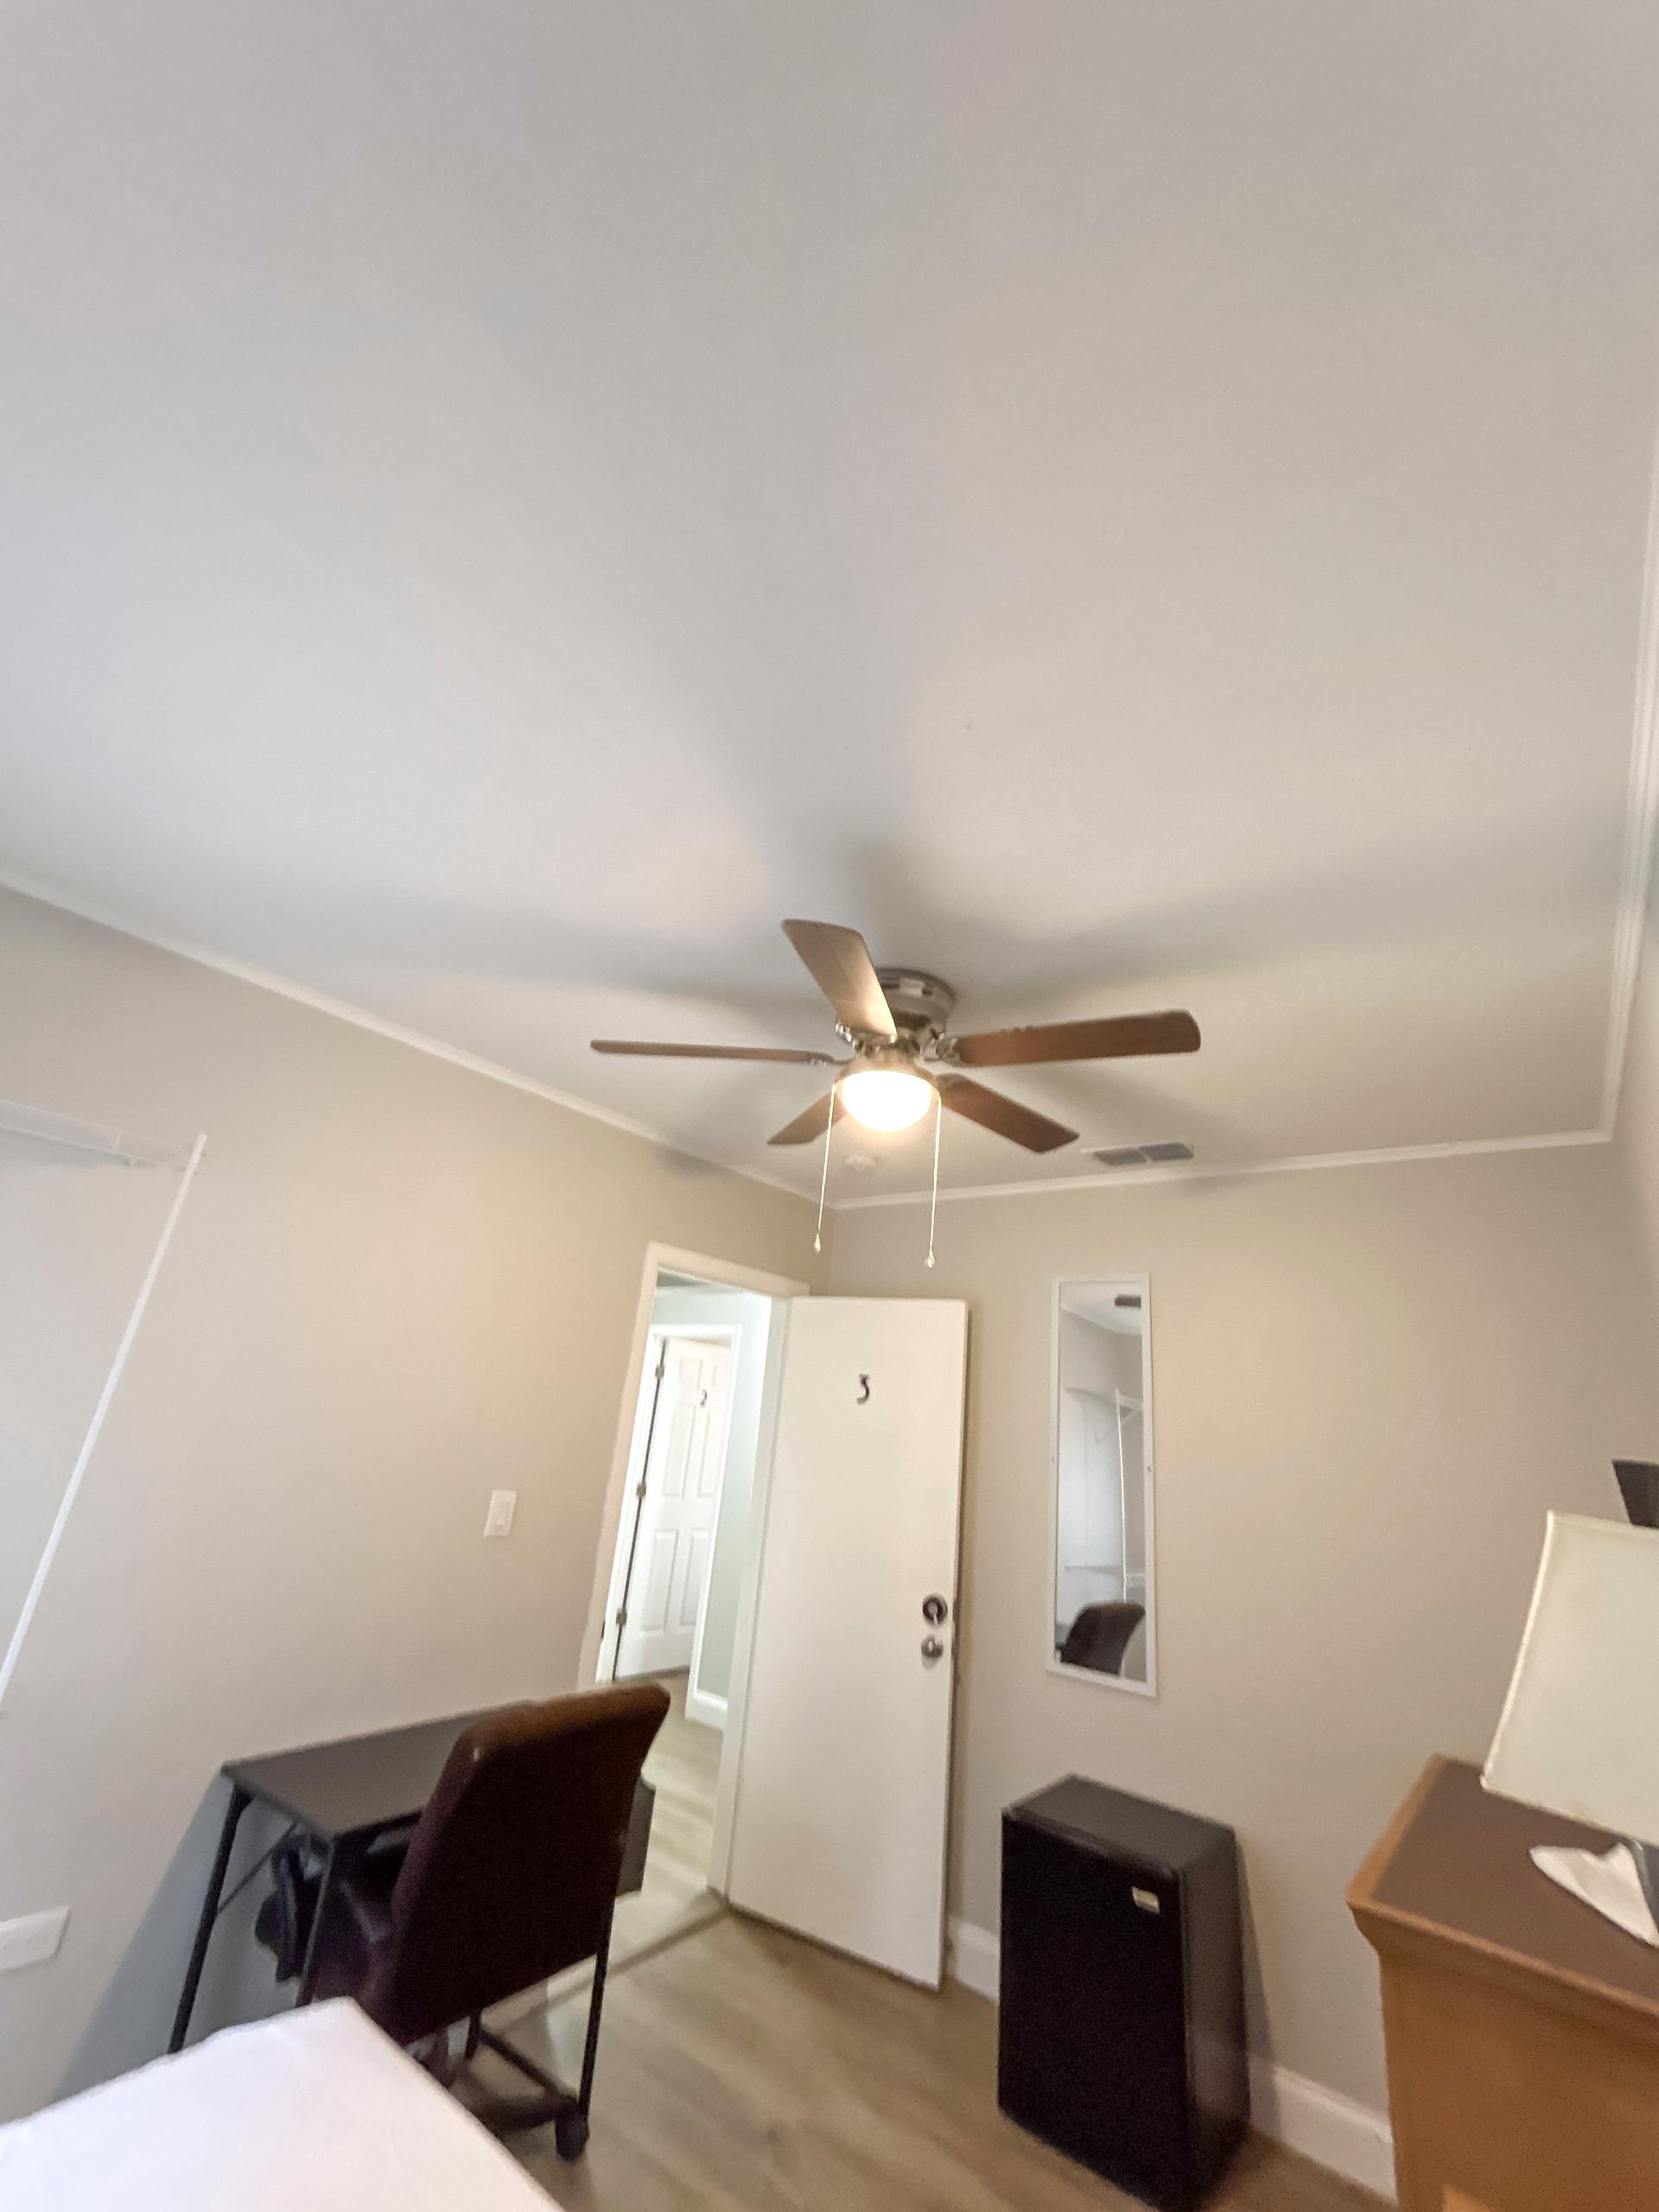 living_room, detected:ceiling fan, window blind